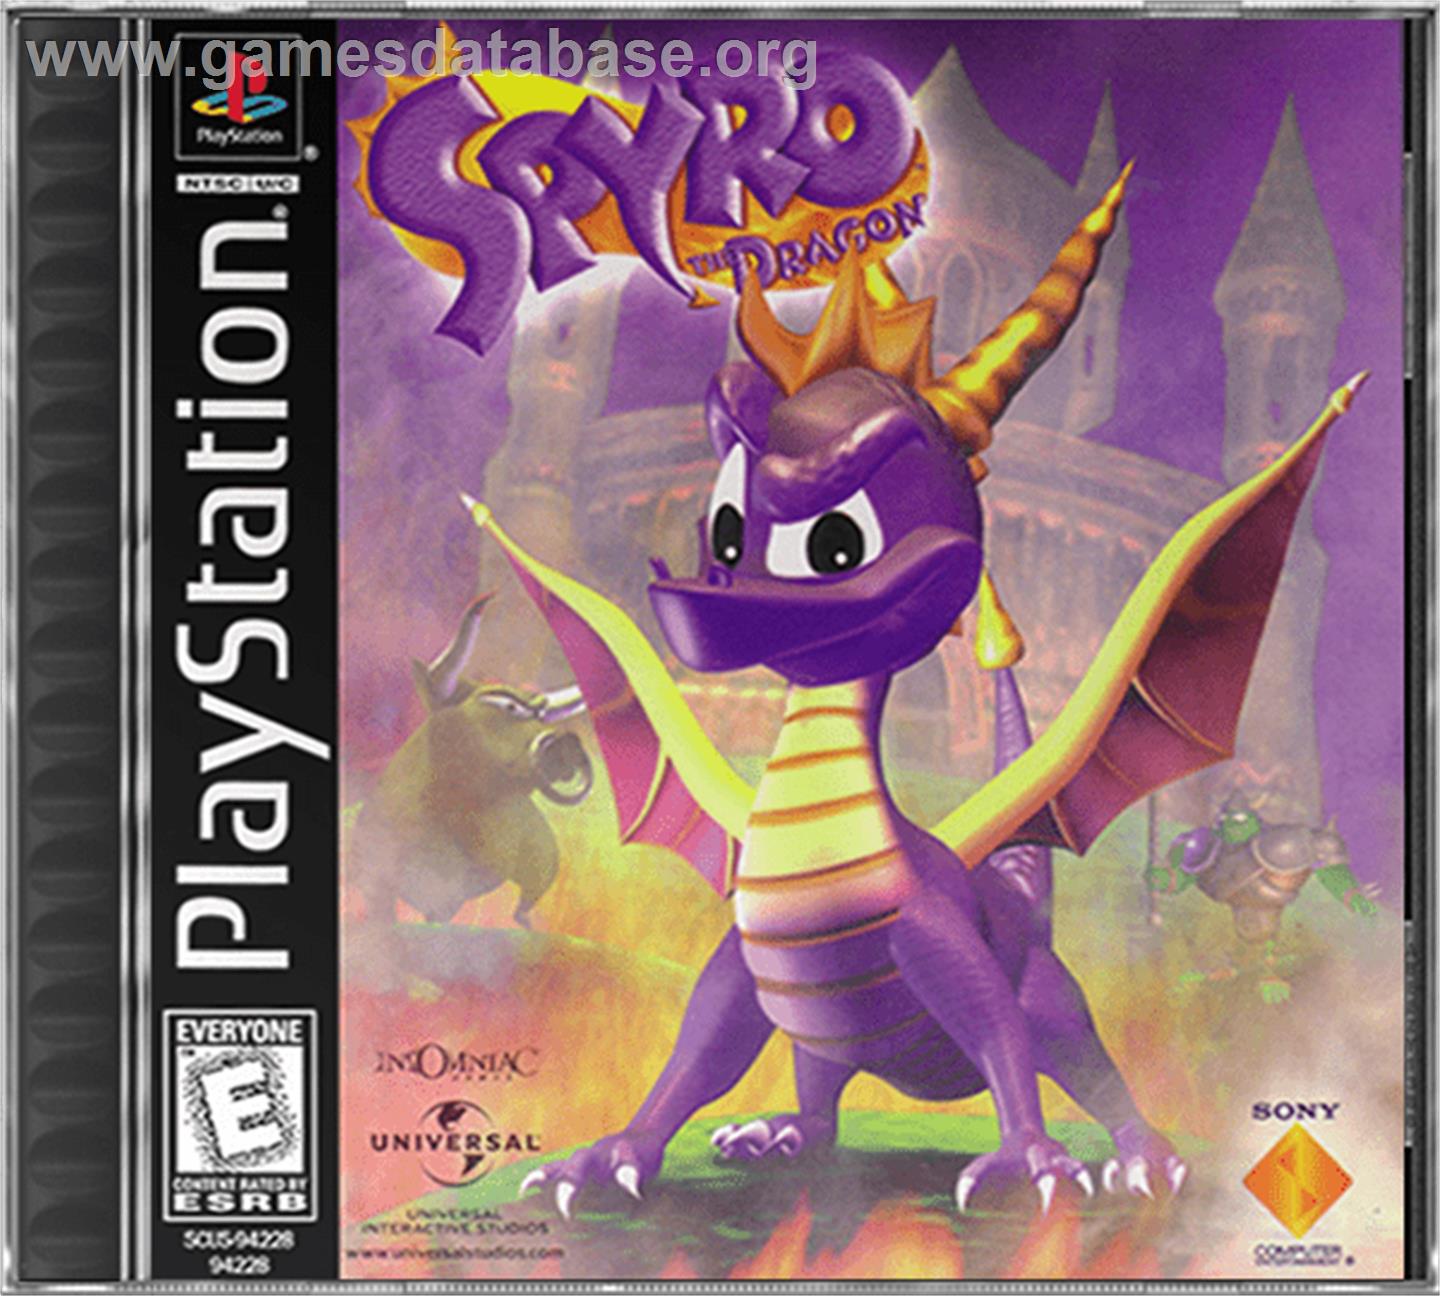 Spyro the Dragon - Sony Playstation - Artwork - Box